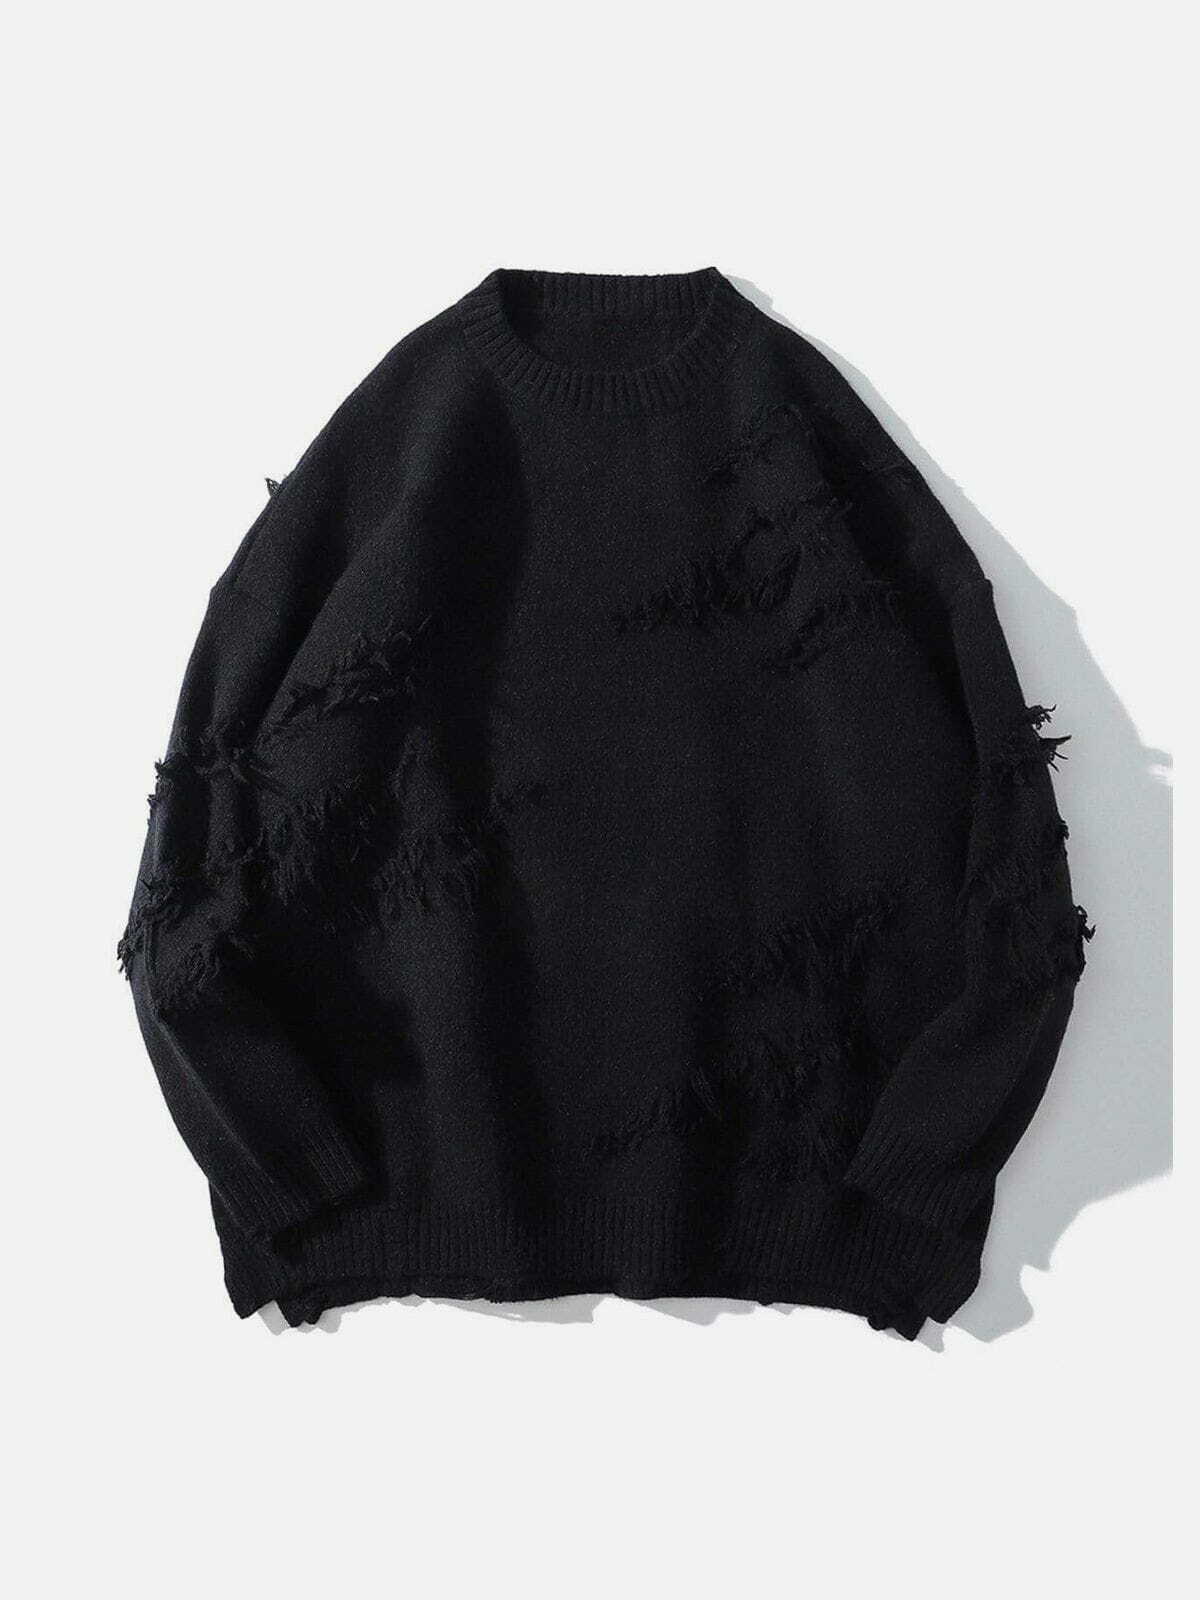 fringed knit sweater edgy y2k fashion essential 5840